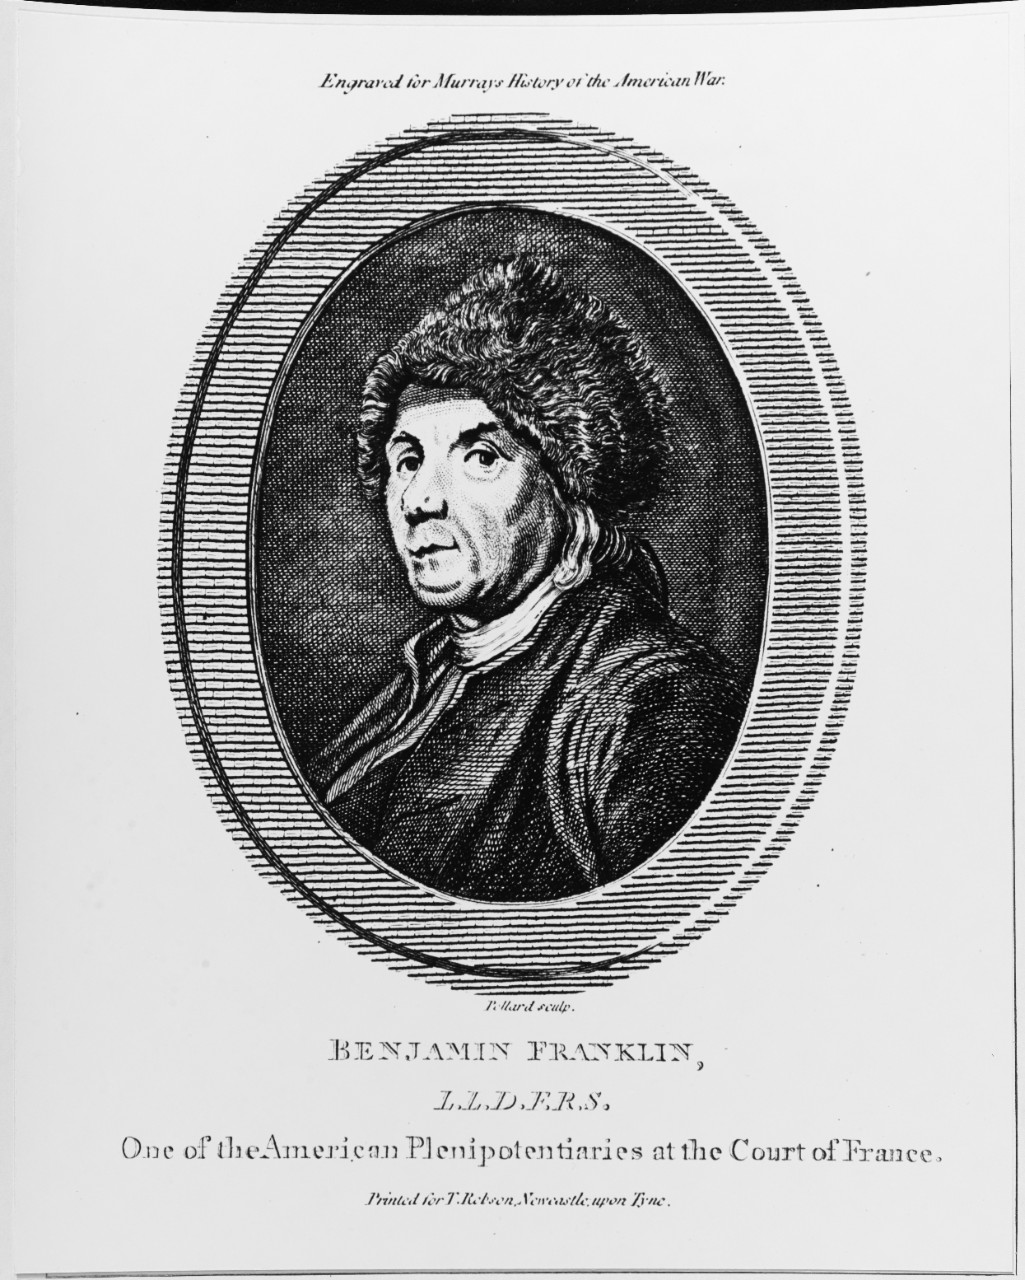 Benjamin Franklin (1706-1790), American philosopher and statesman